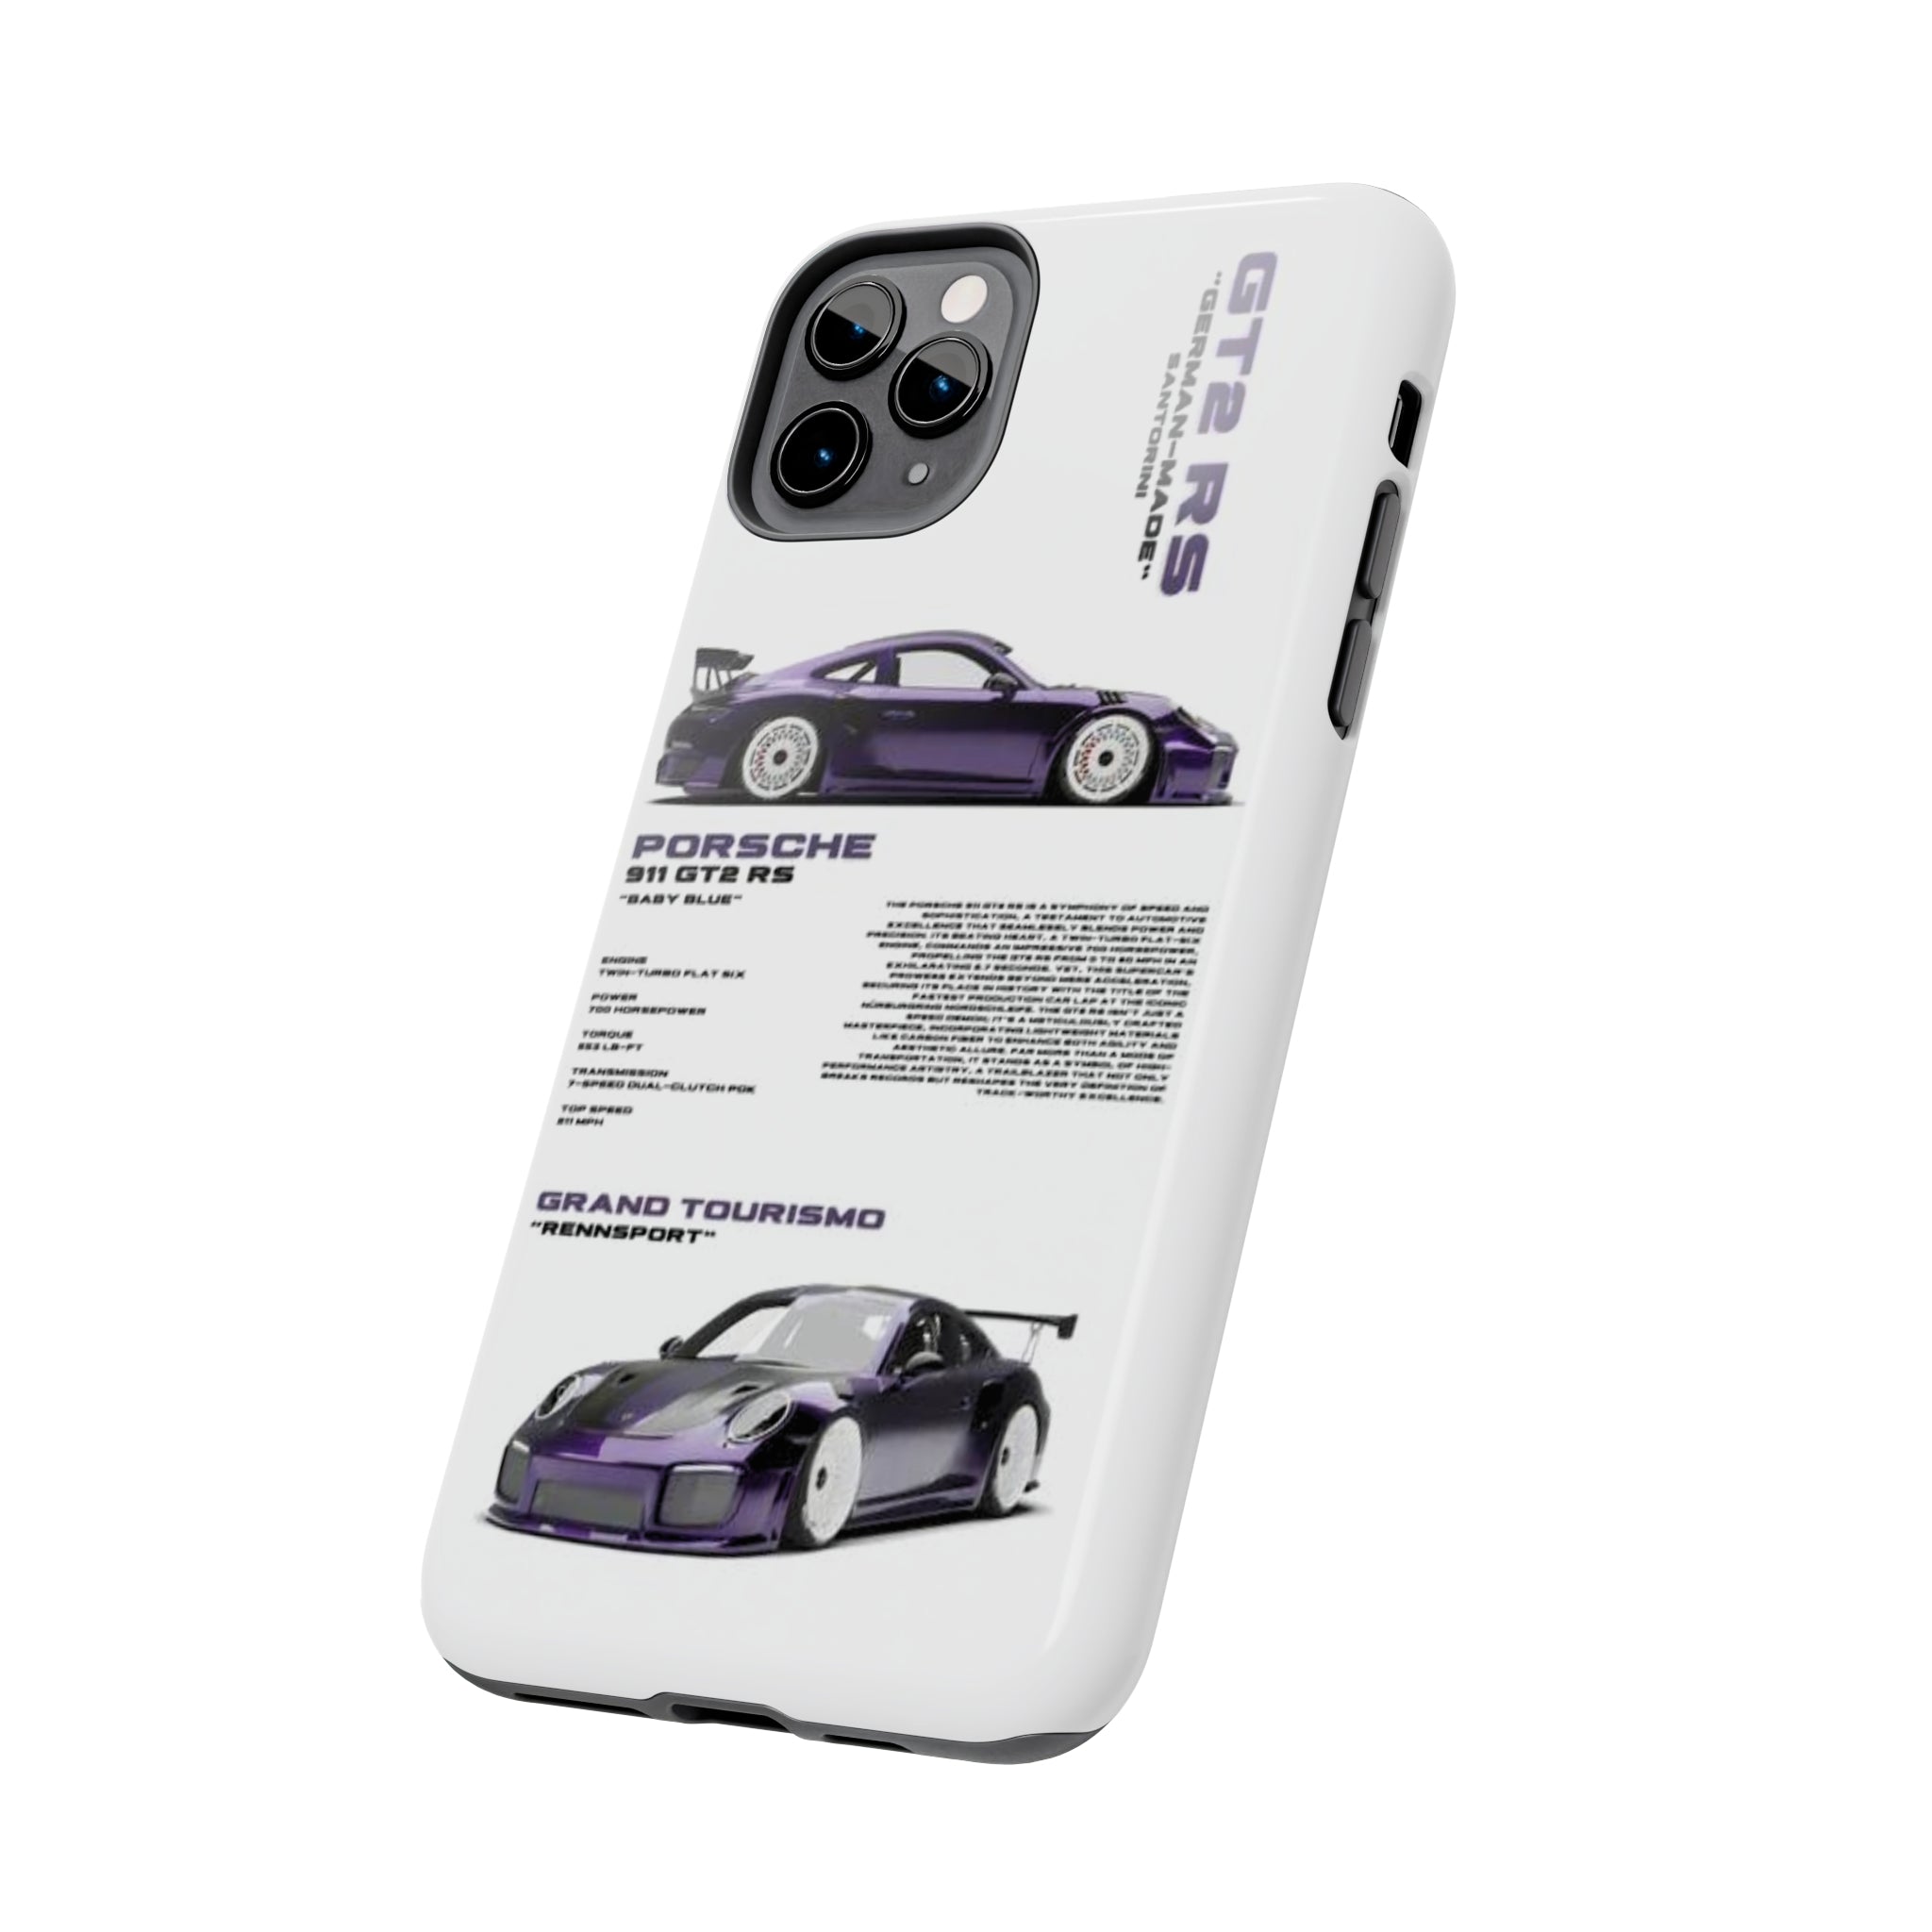 Porsche 911 GT2 RS "Purple"